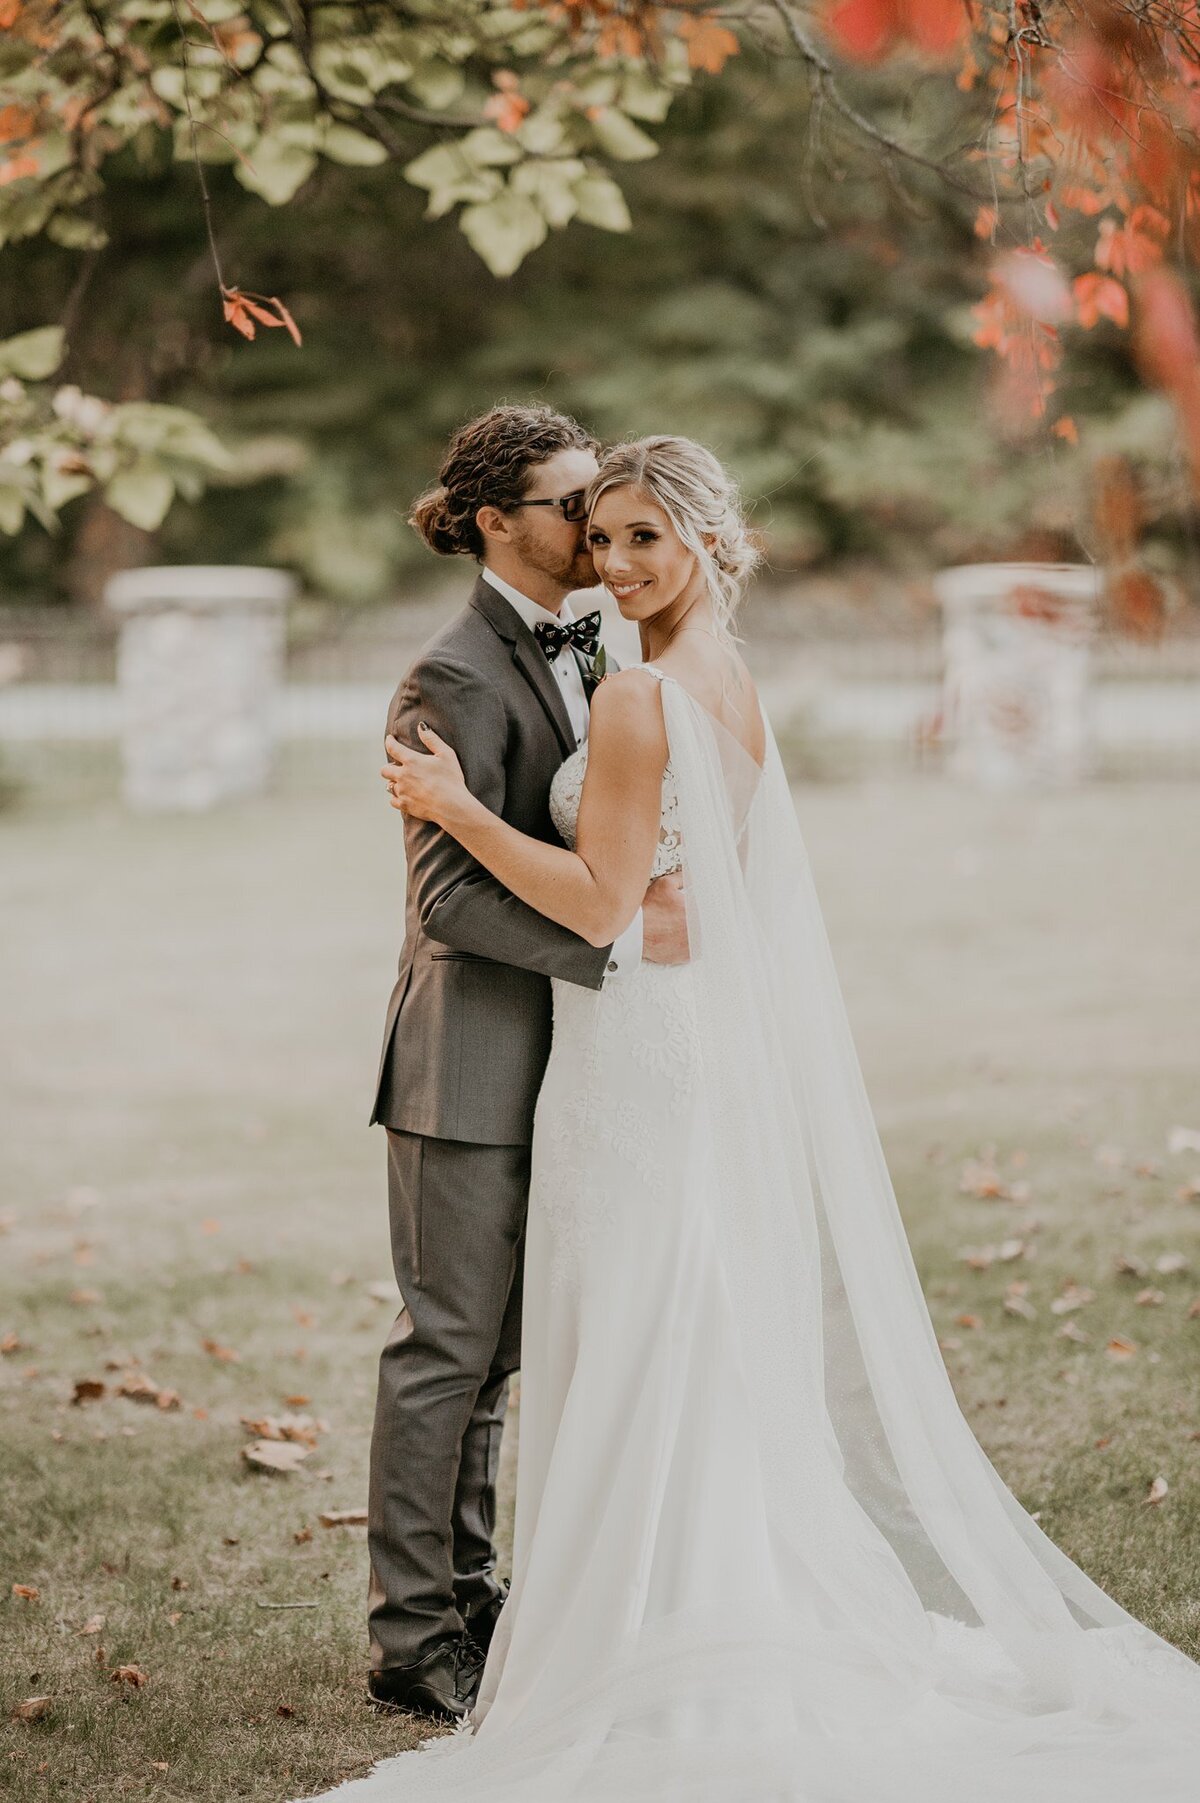 Brit-Rader-Photography-Fall-September-Indiana-Wedding-Stonegate-Manor-Benton-Harbor-Michigan-1161